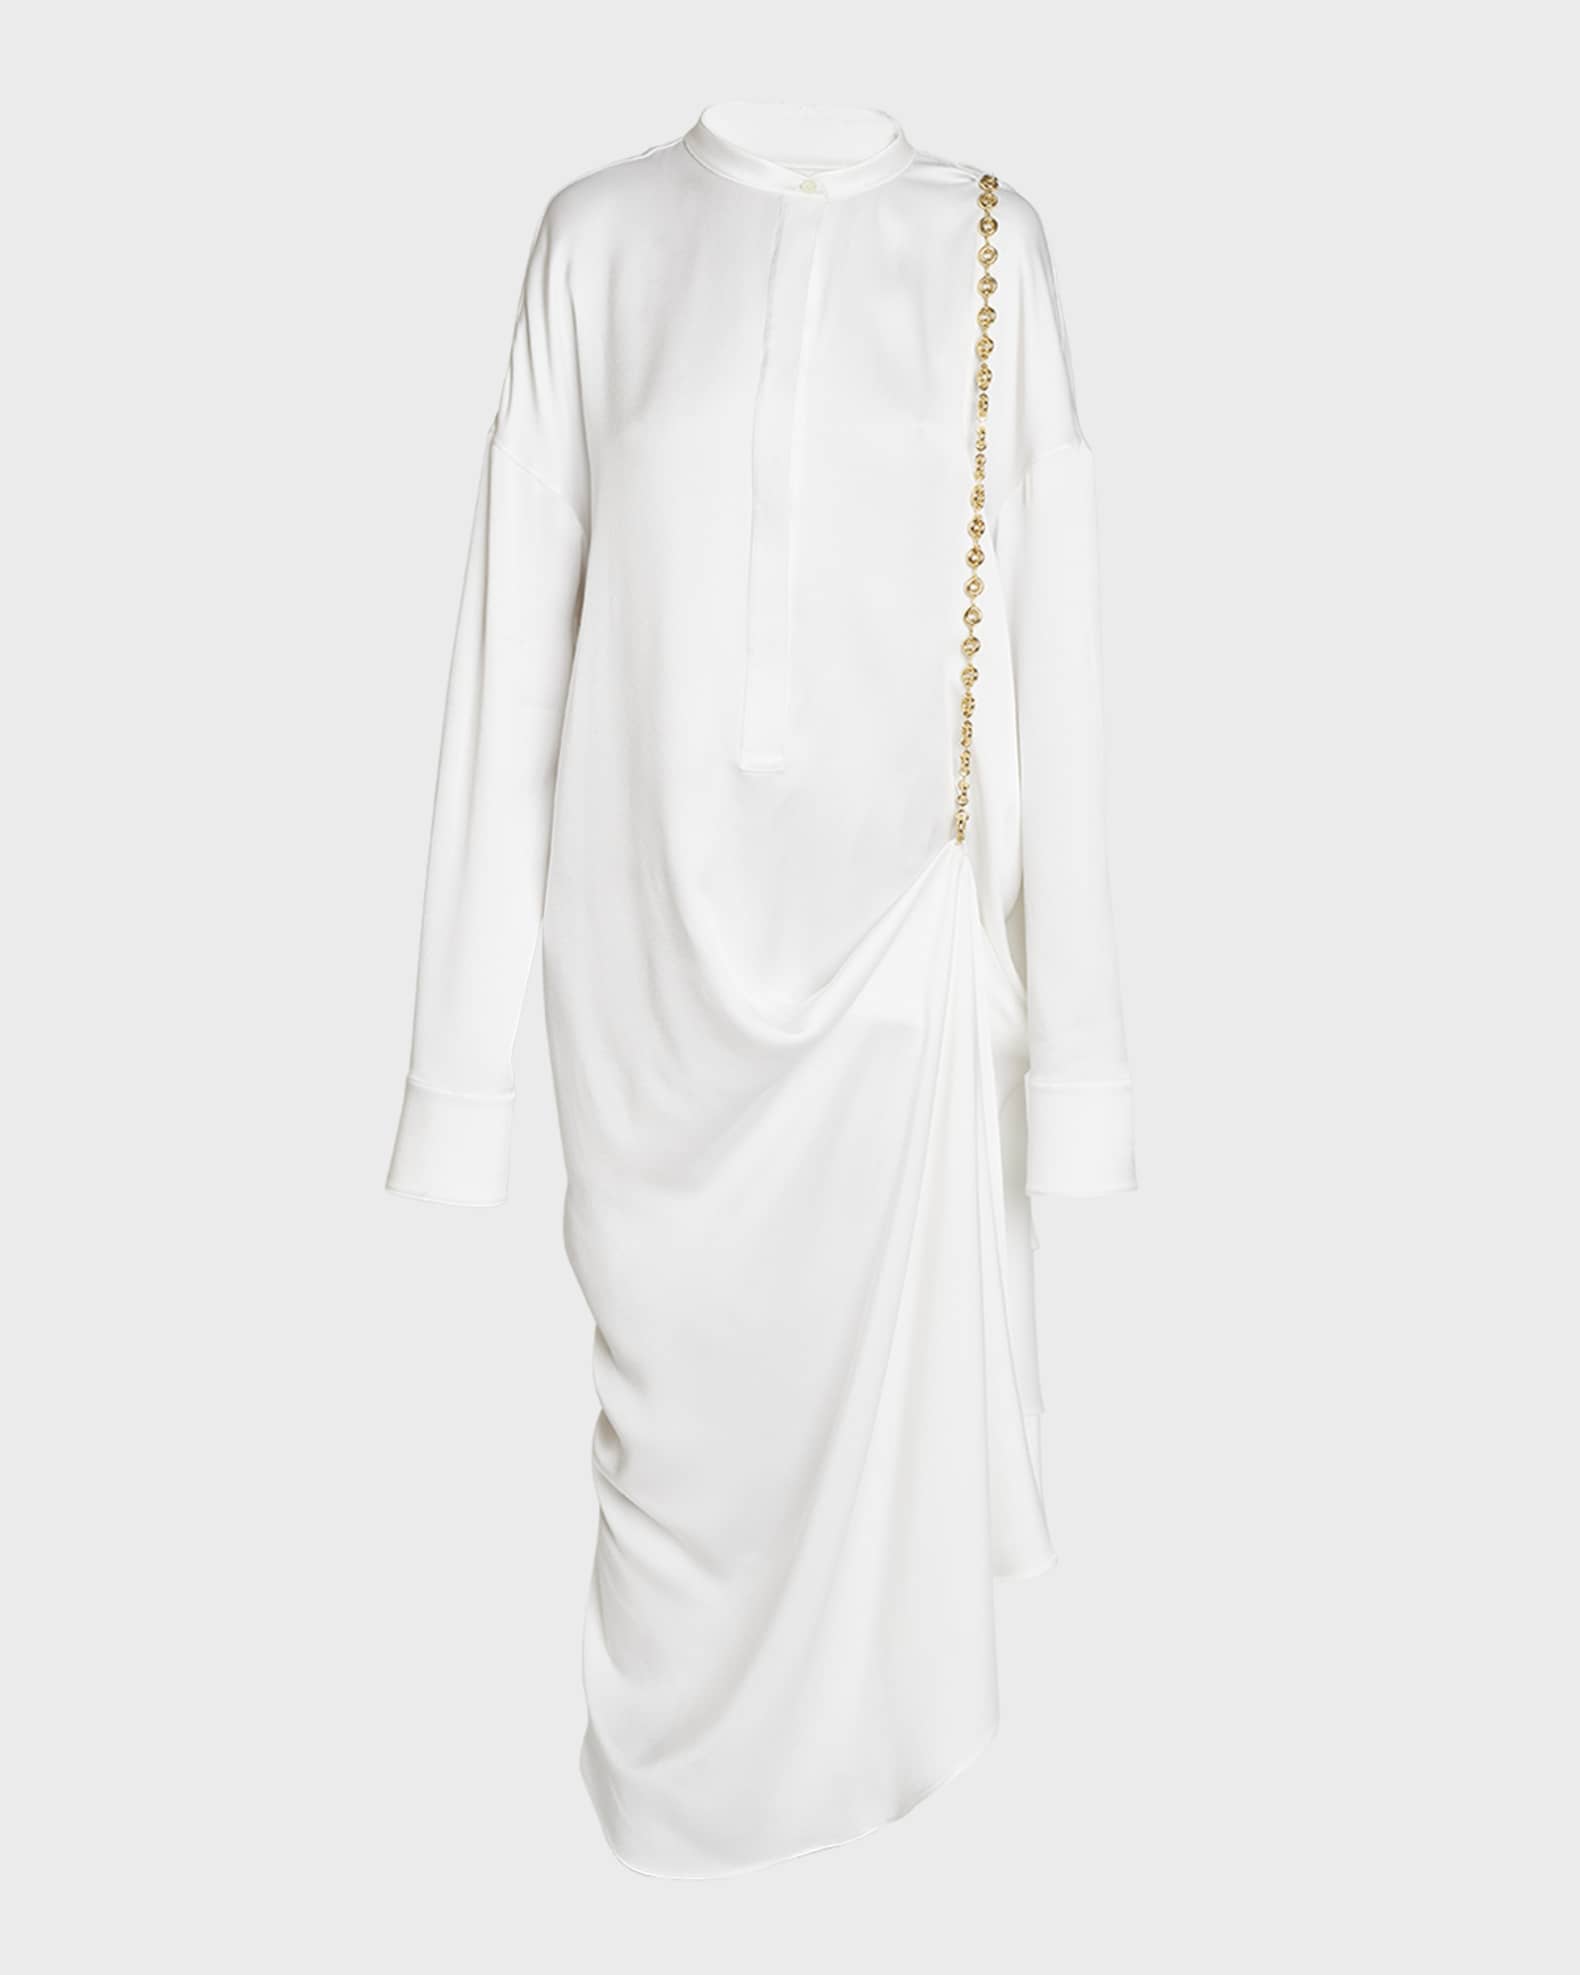 Loewe Silk Long Shirtdress with Chain Drape Detail | Neiman Marcus